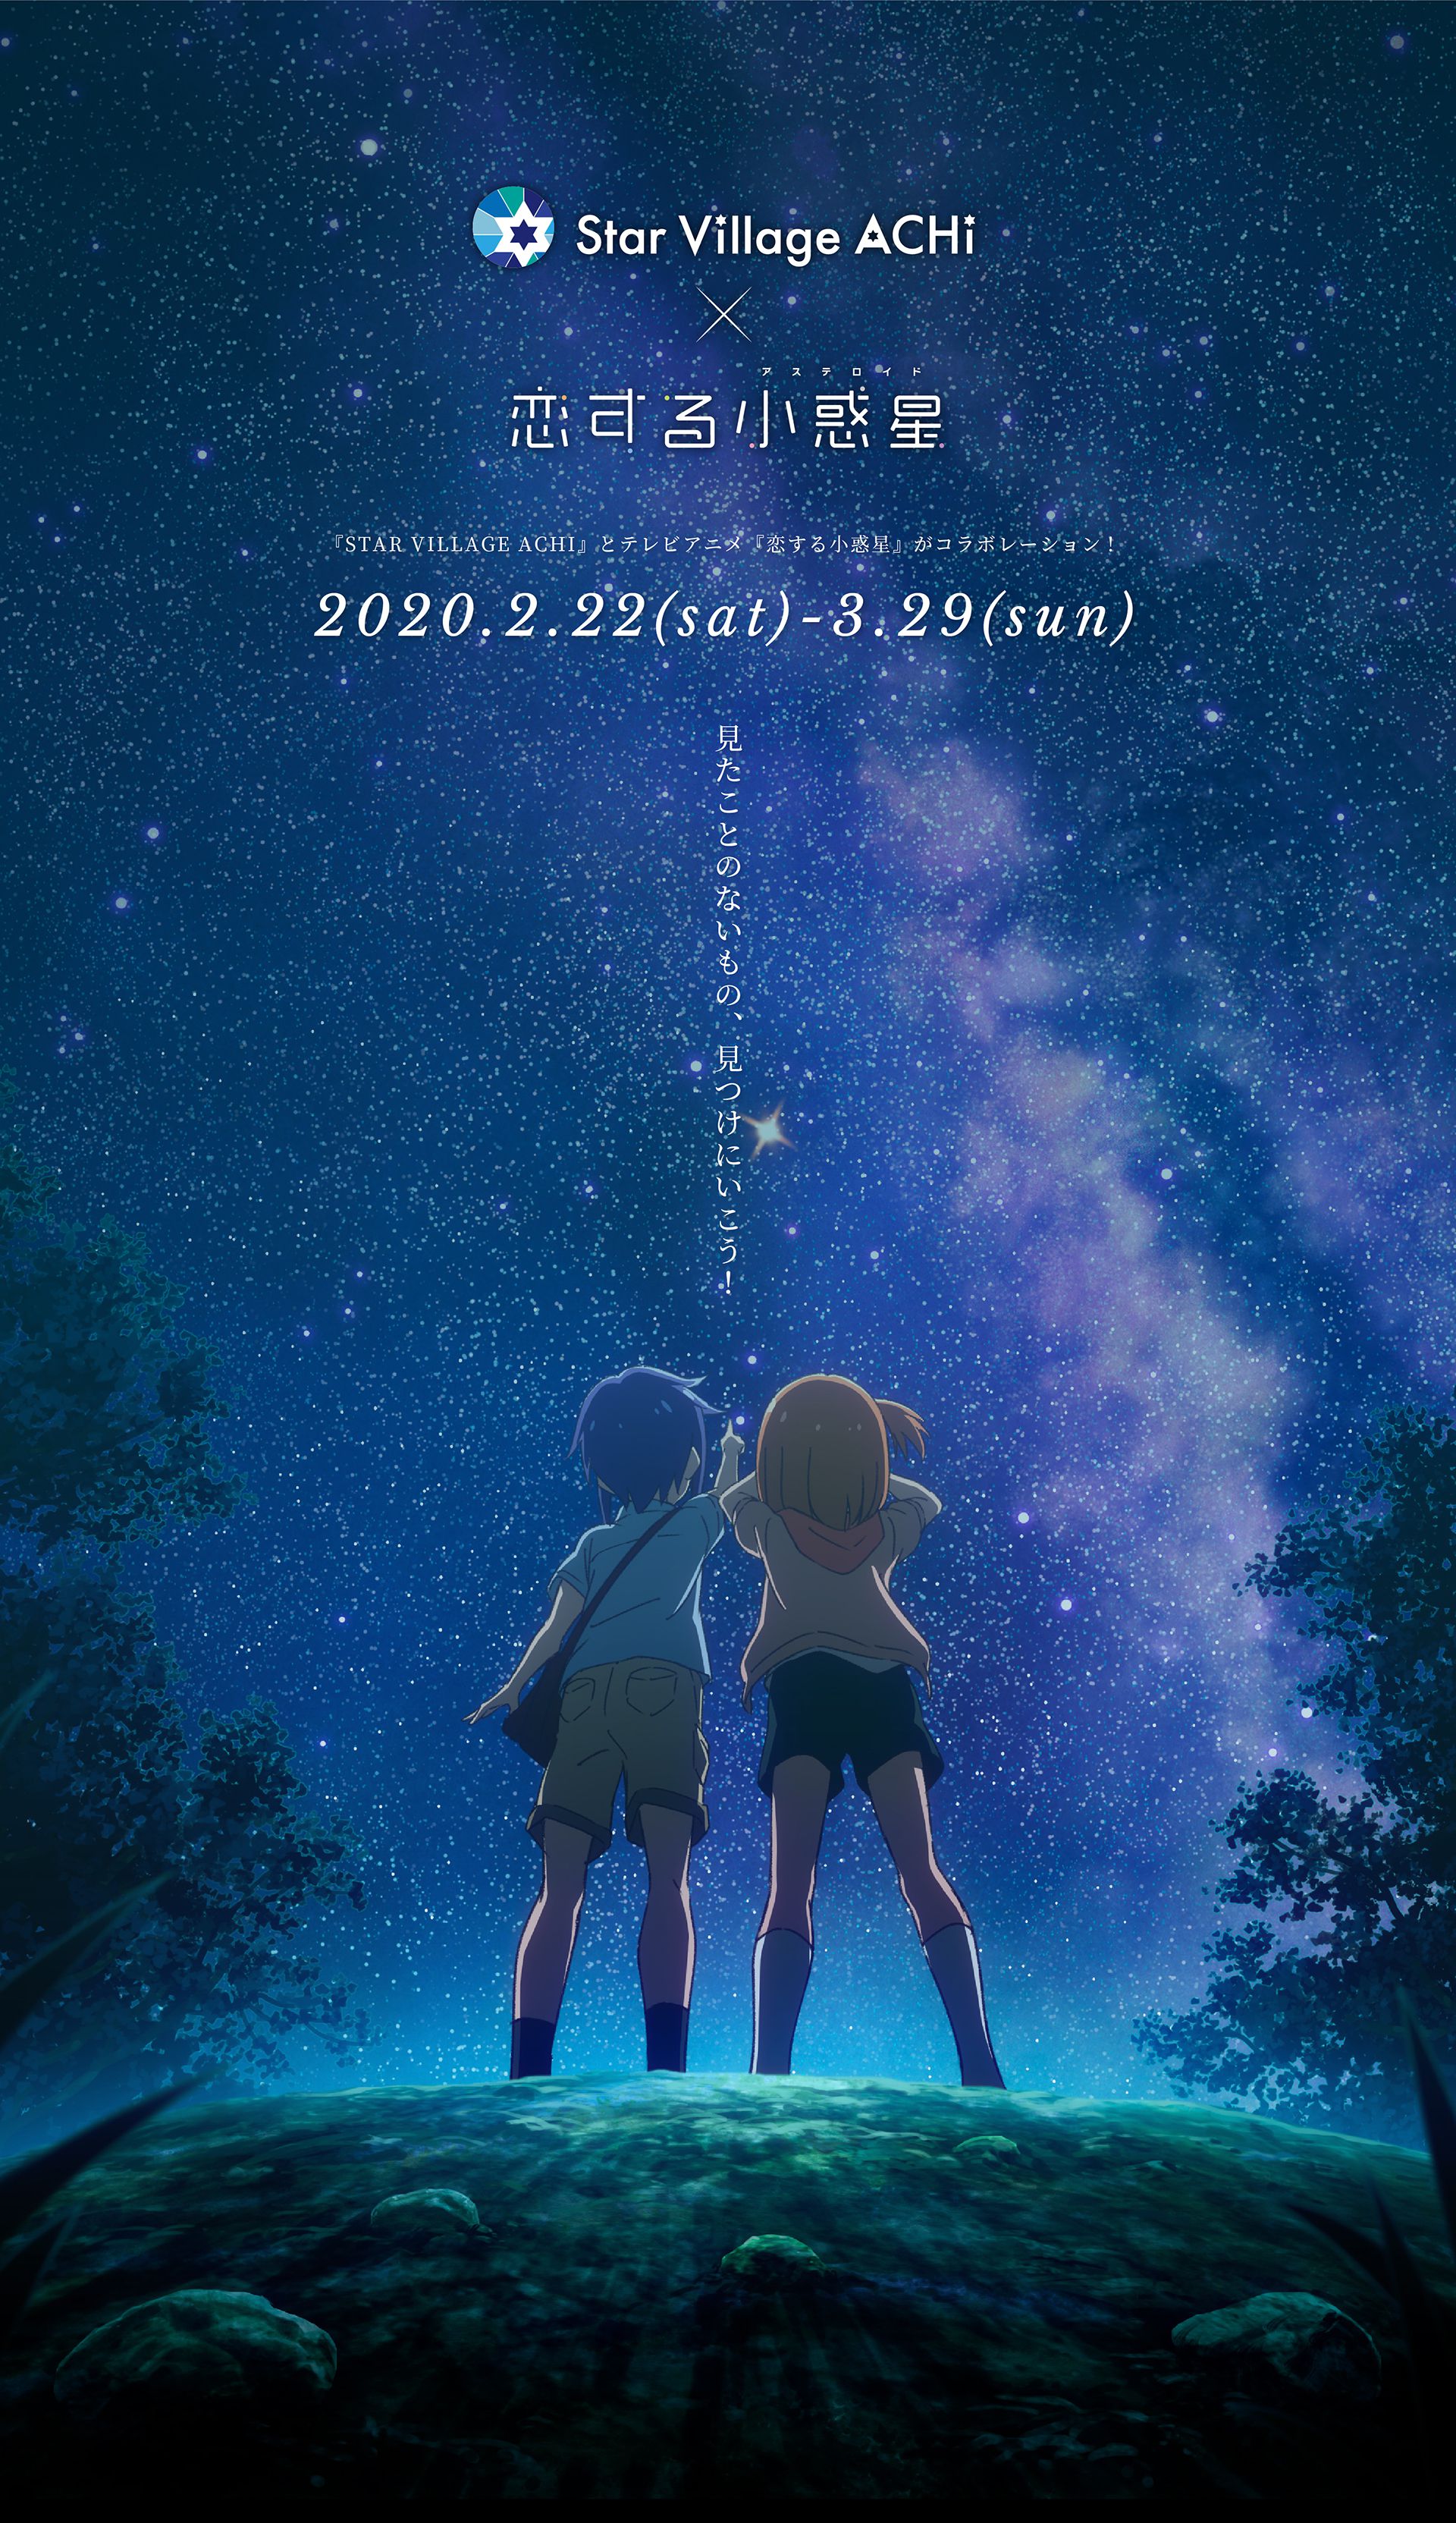 『STAR VILLAGE ACHI』とテレビアニメ『恋する小惑星』がコラボレーション!